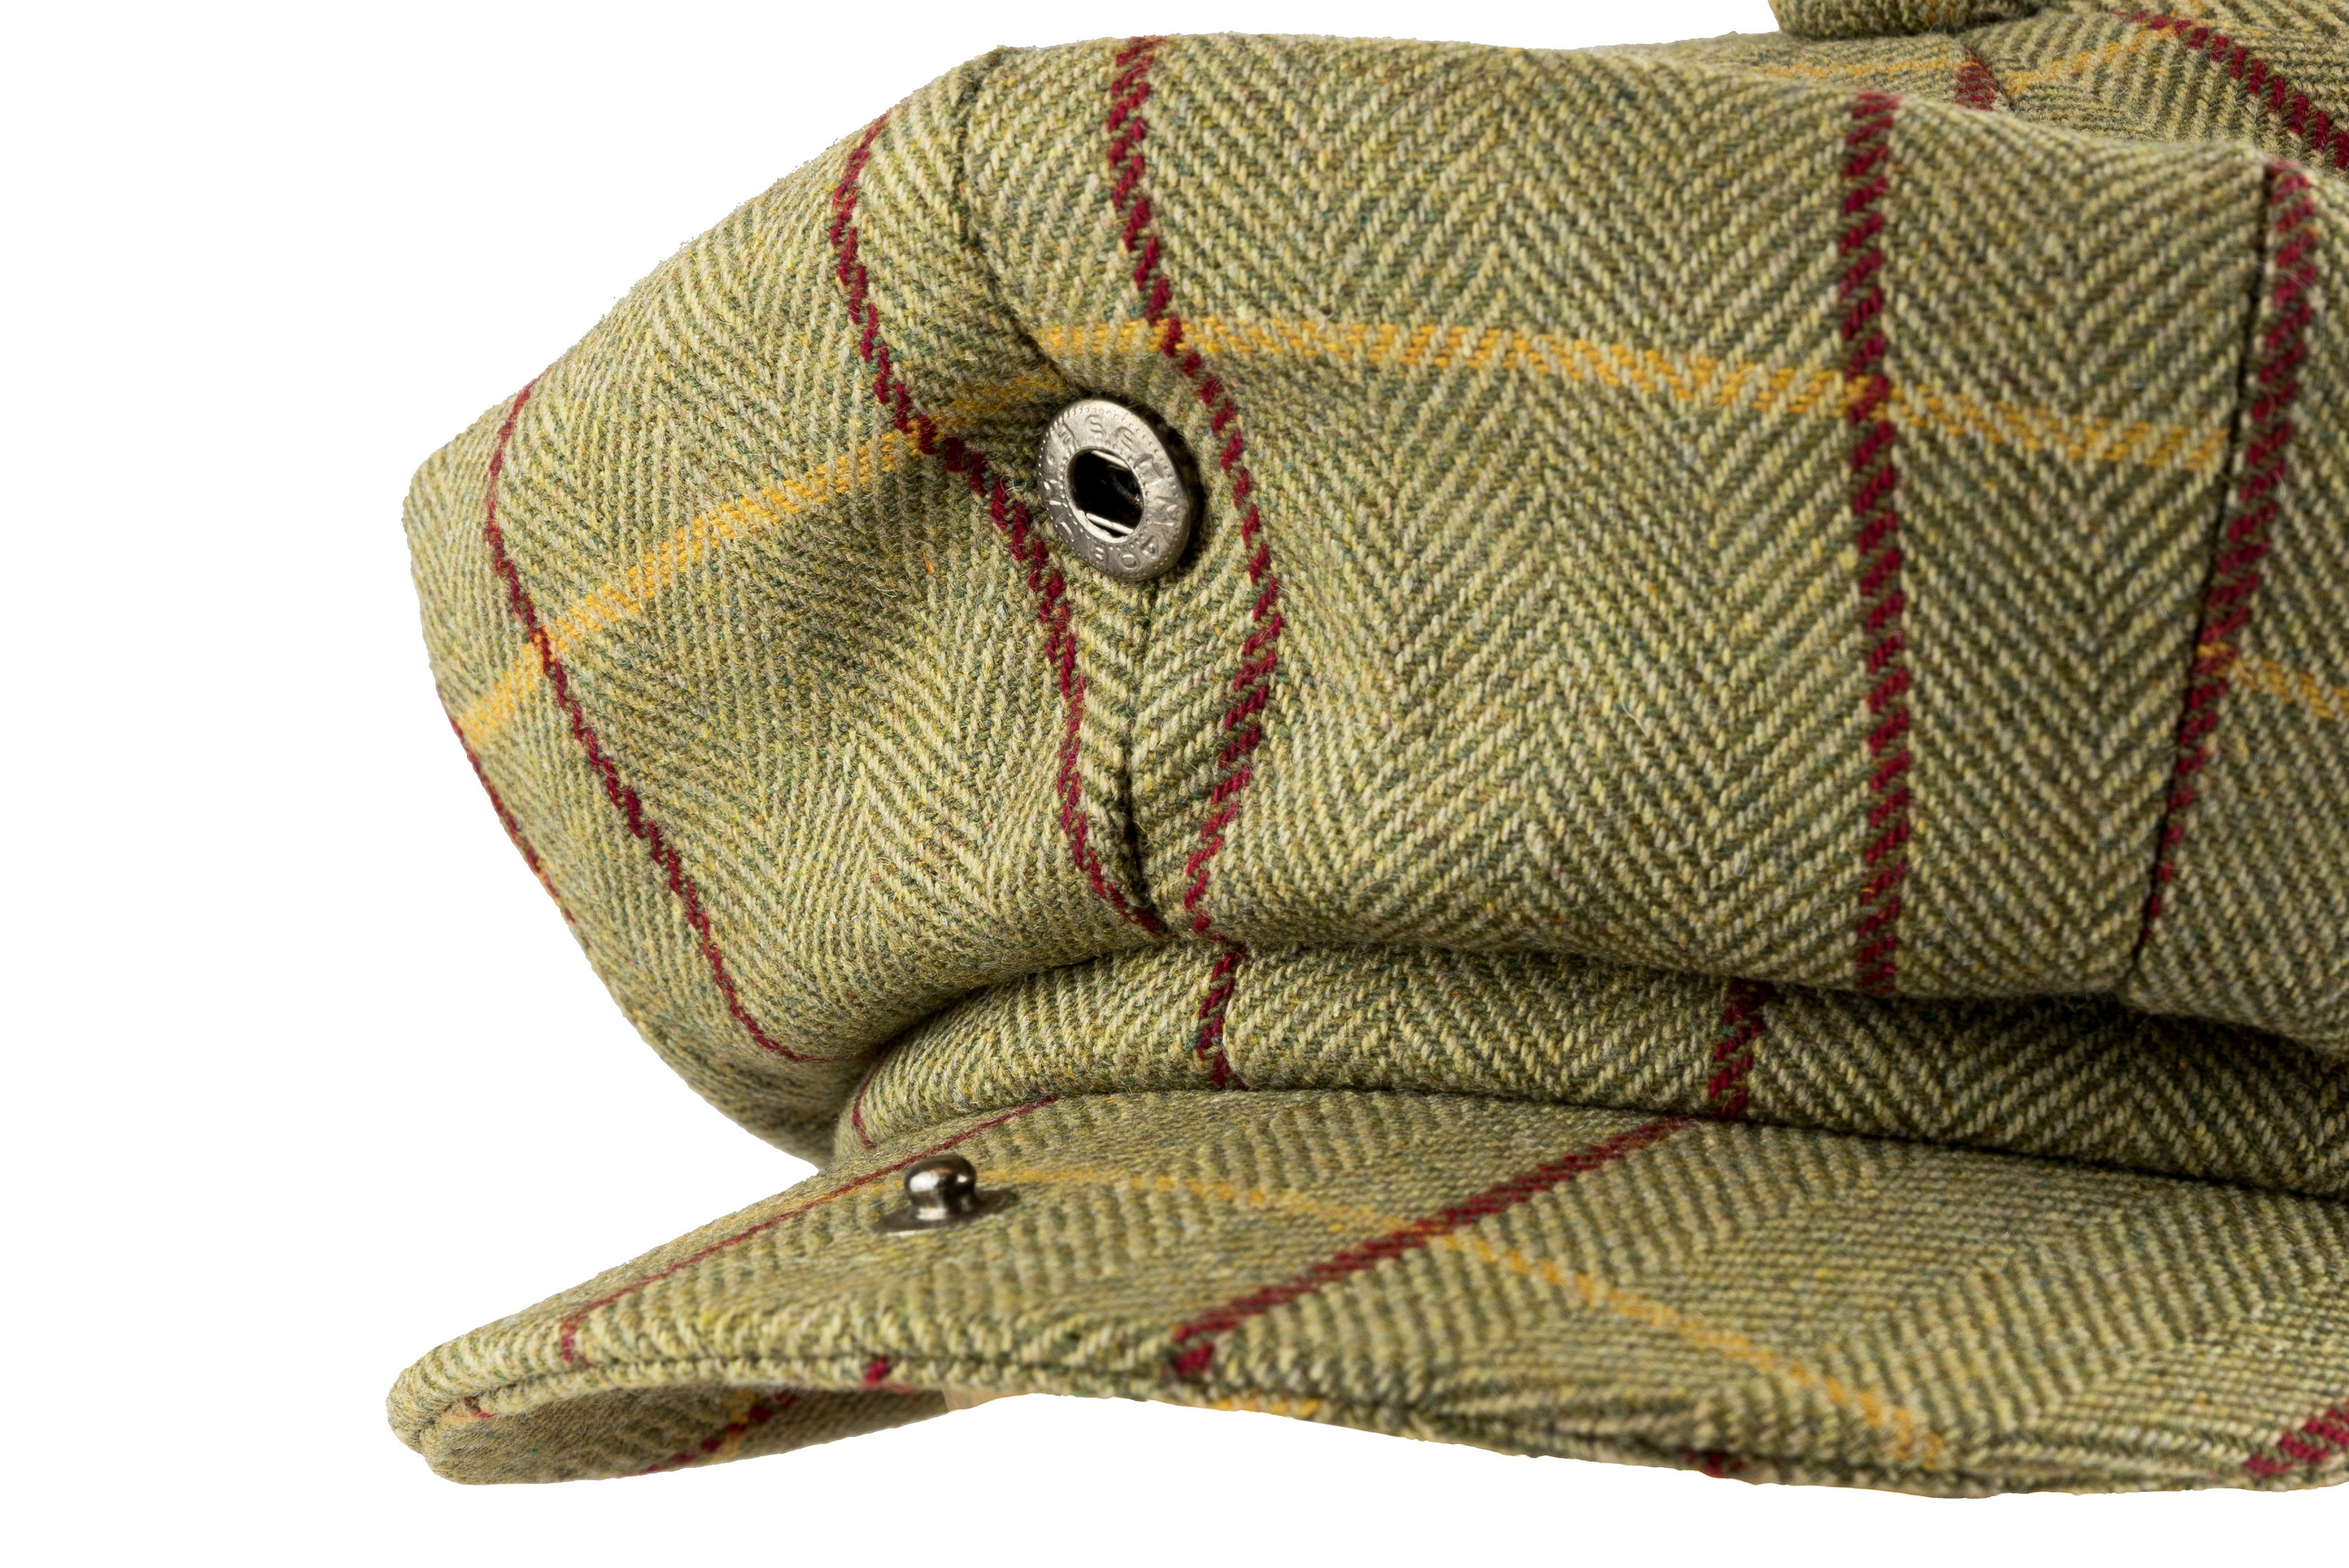 Jack Pyke Wool Blend Baker Boy Hat in Tweed Green